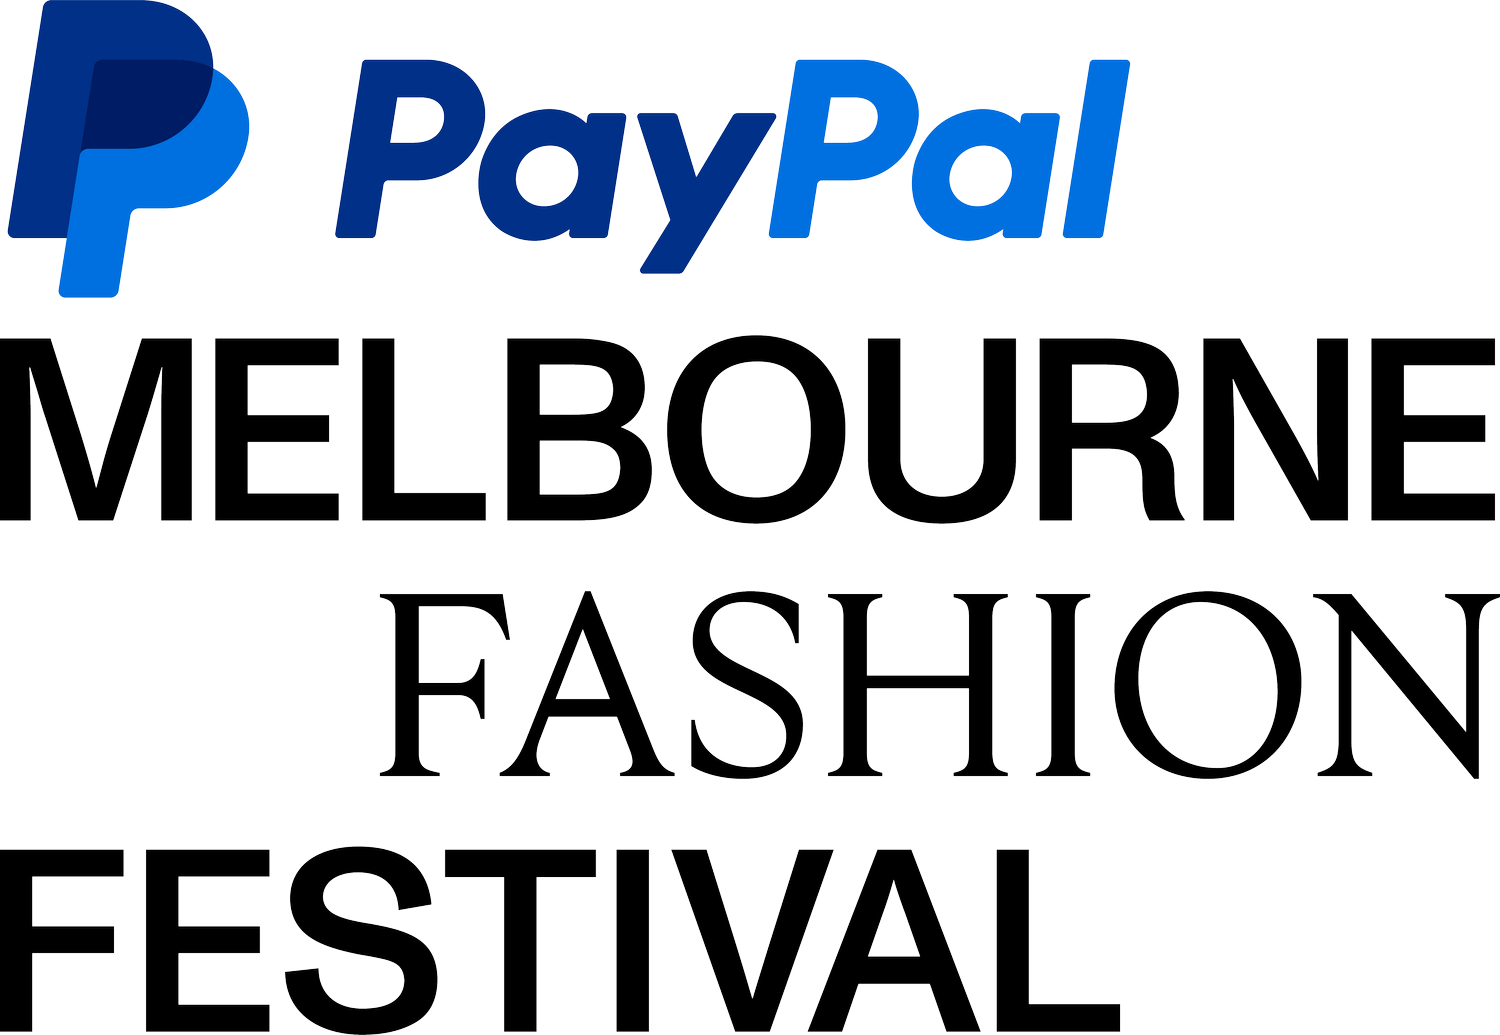 PayPal Melbourne Fashion Festival